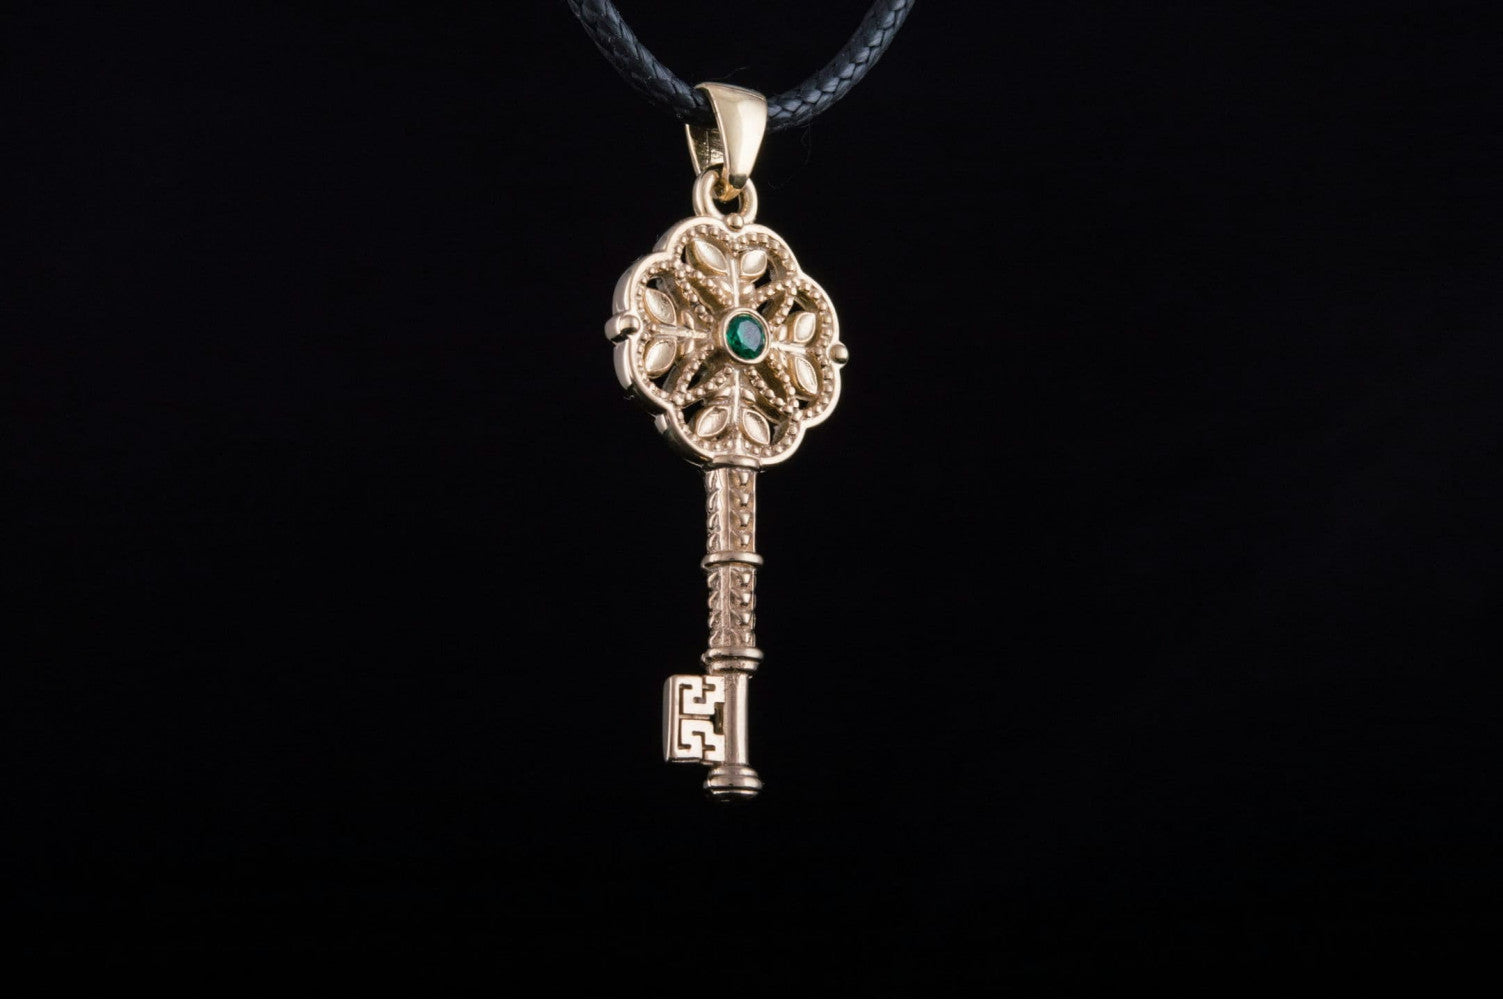 14K Gold Fashion Key Pendant with Cubic Zirconia Jewelry